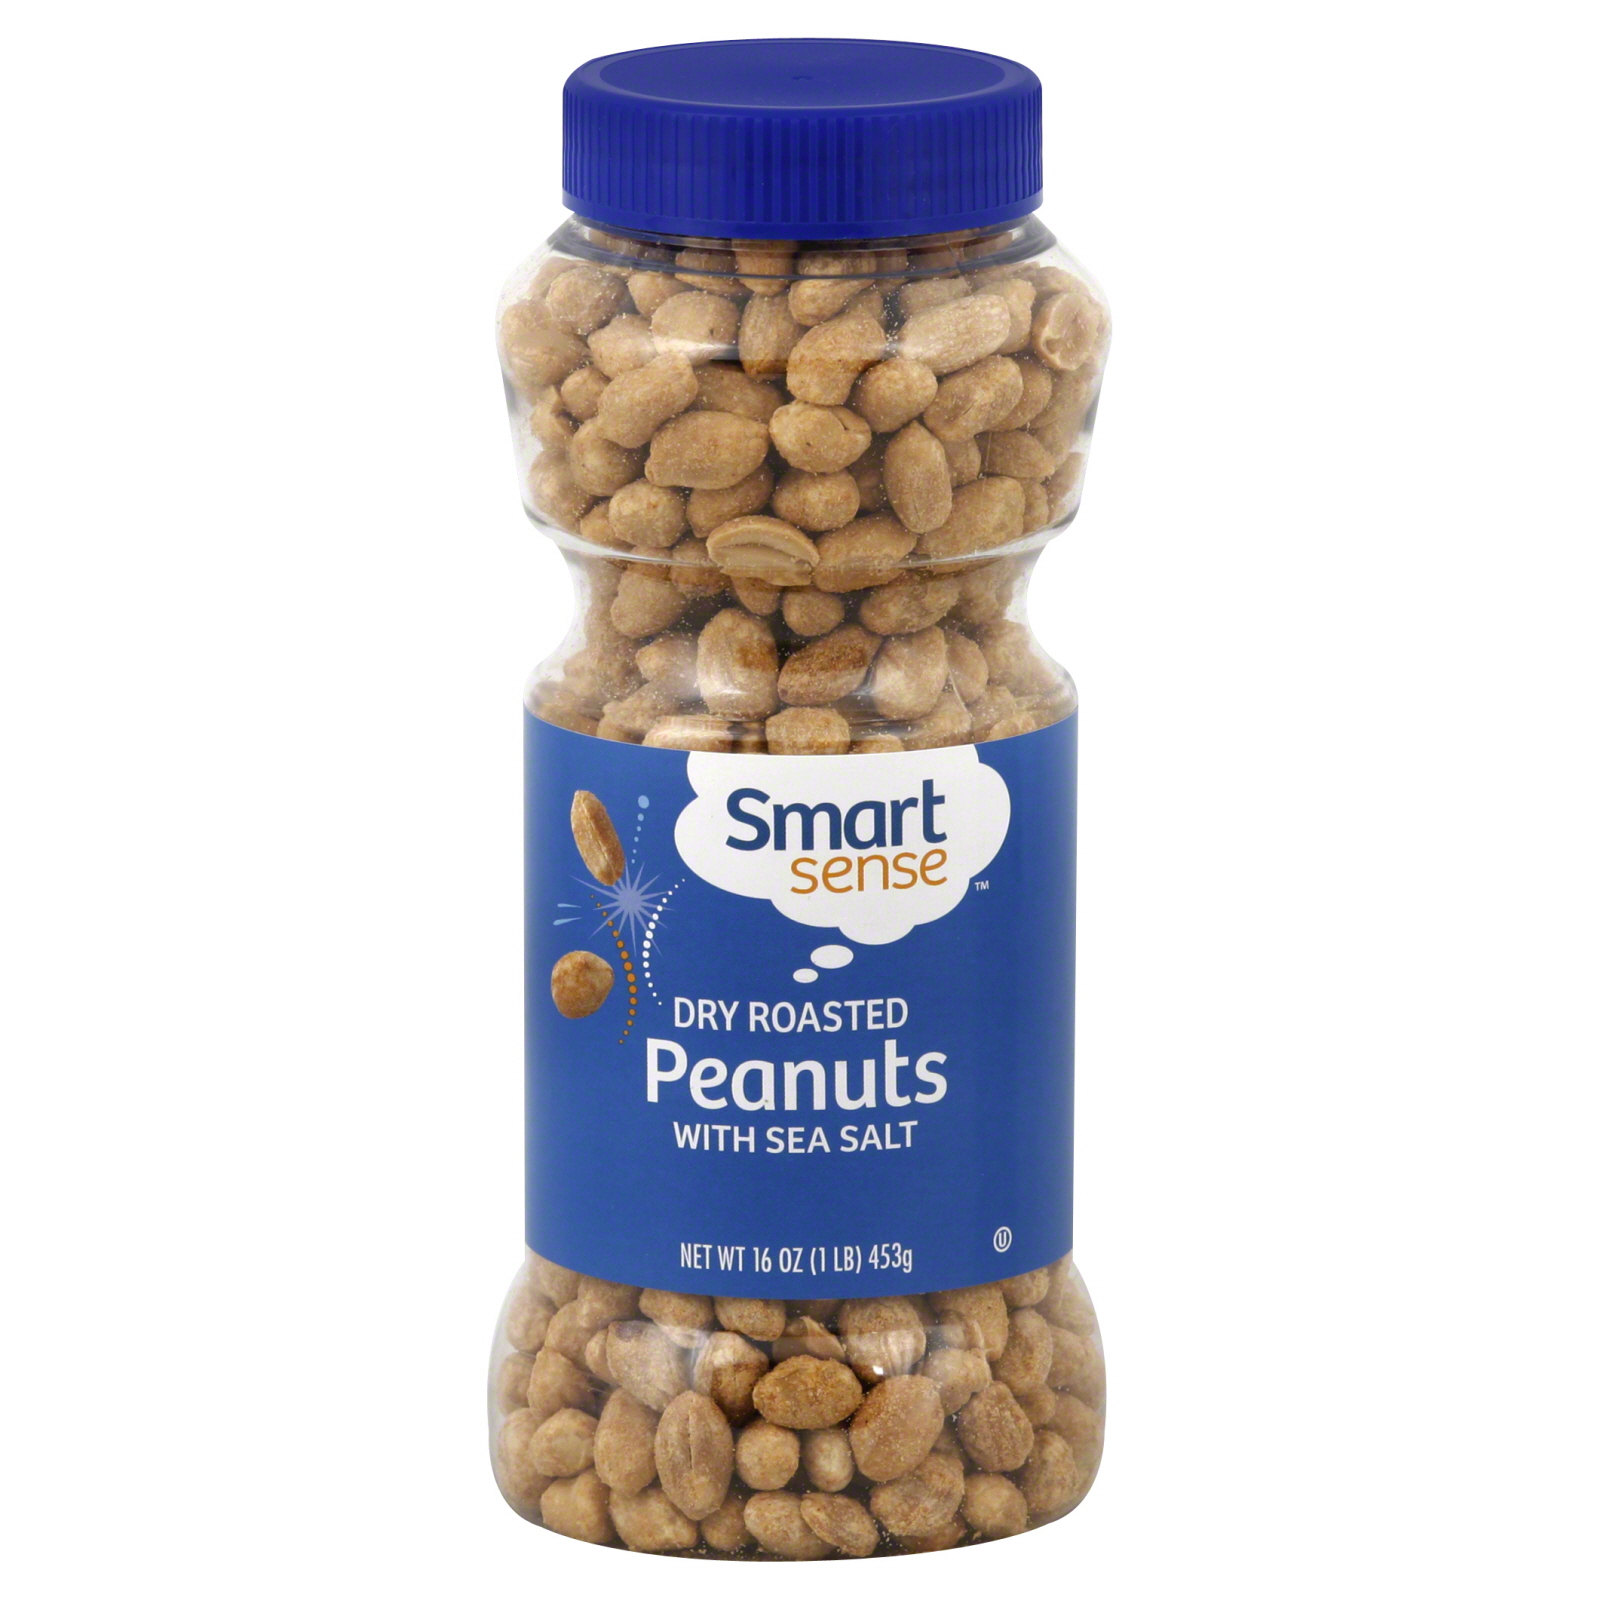 Smart Sense Peanuts, Dry Roasted 16 oz (1 lb) 453 g